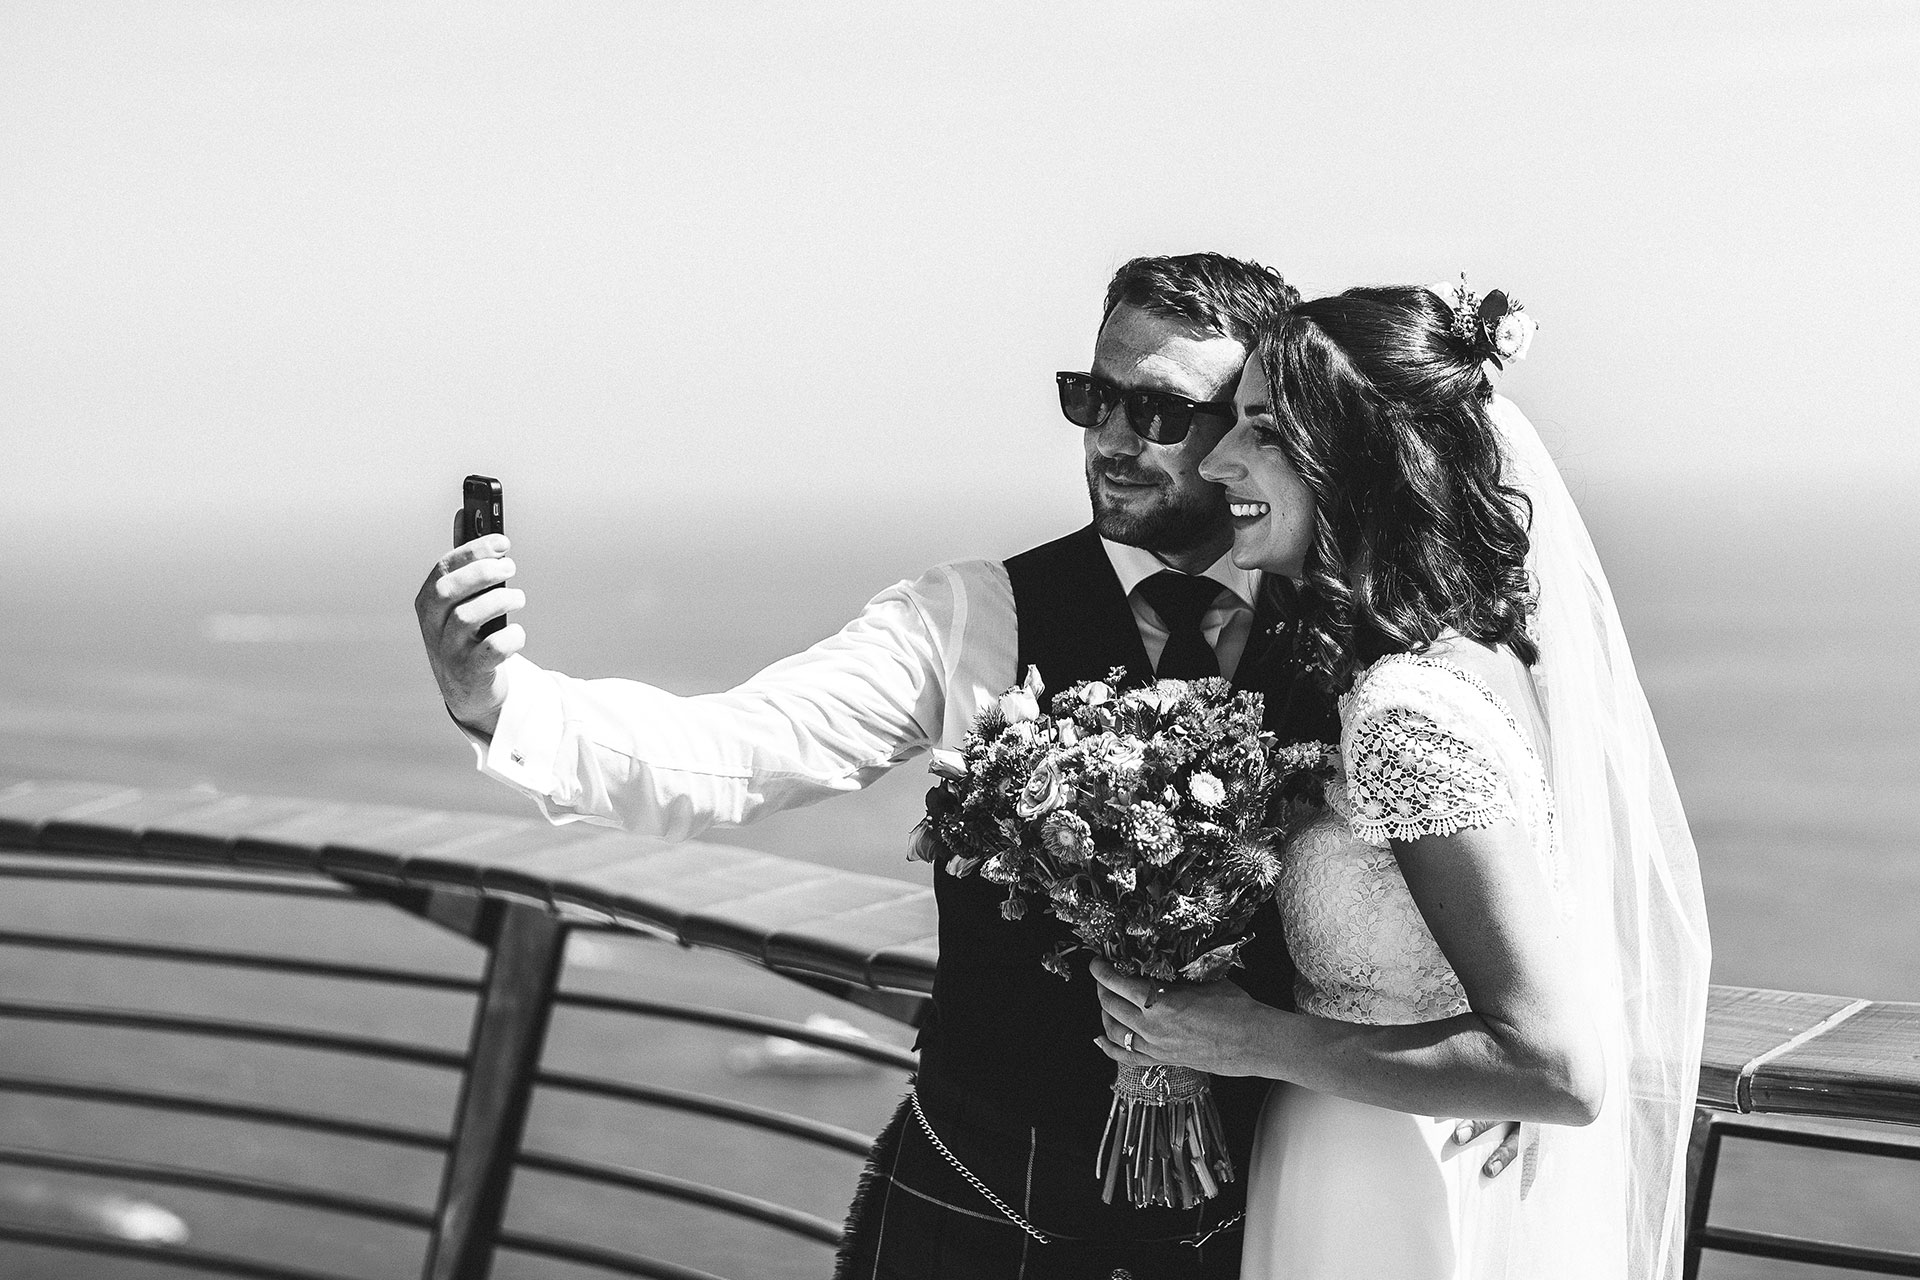 Wedding Photographer Positano